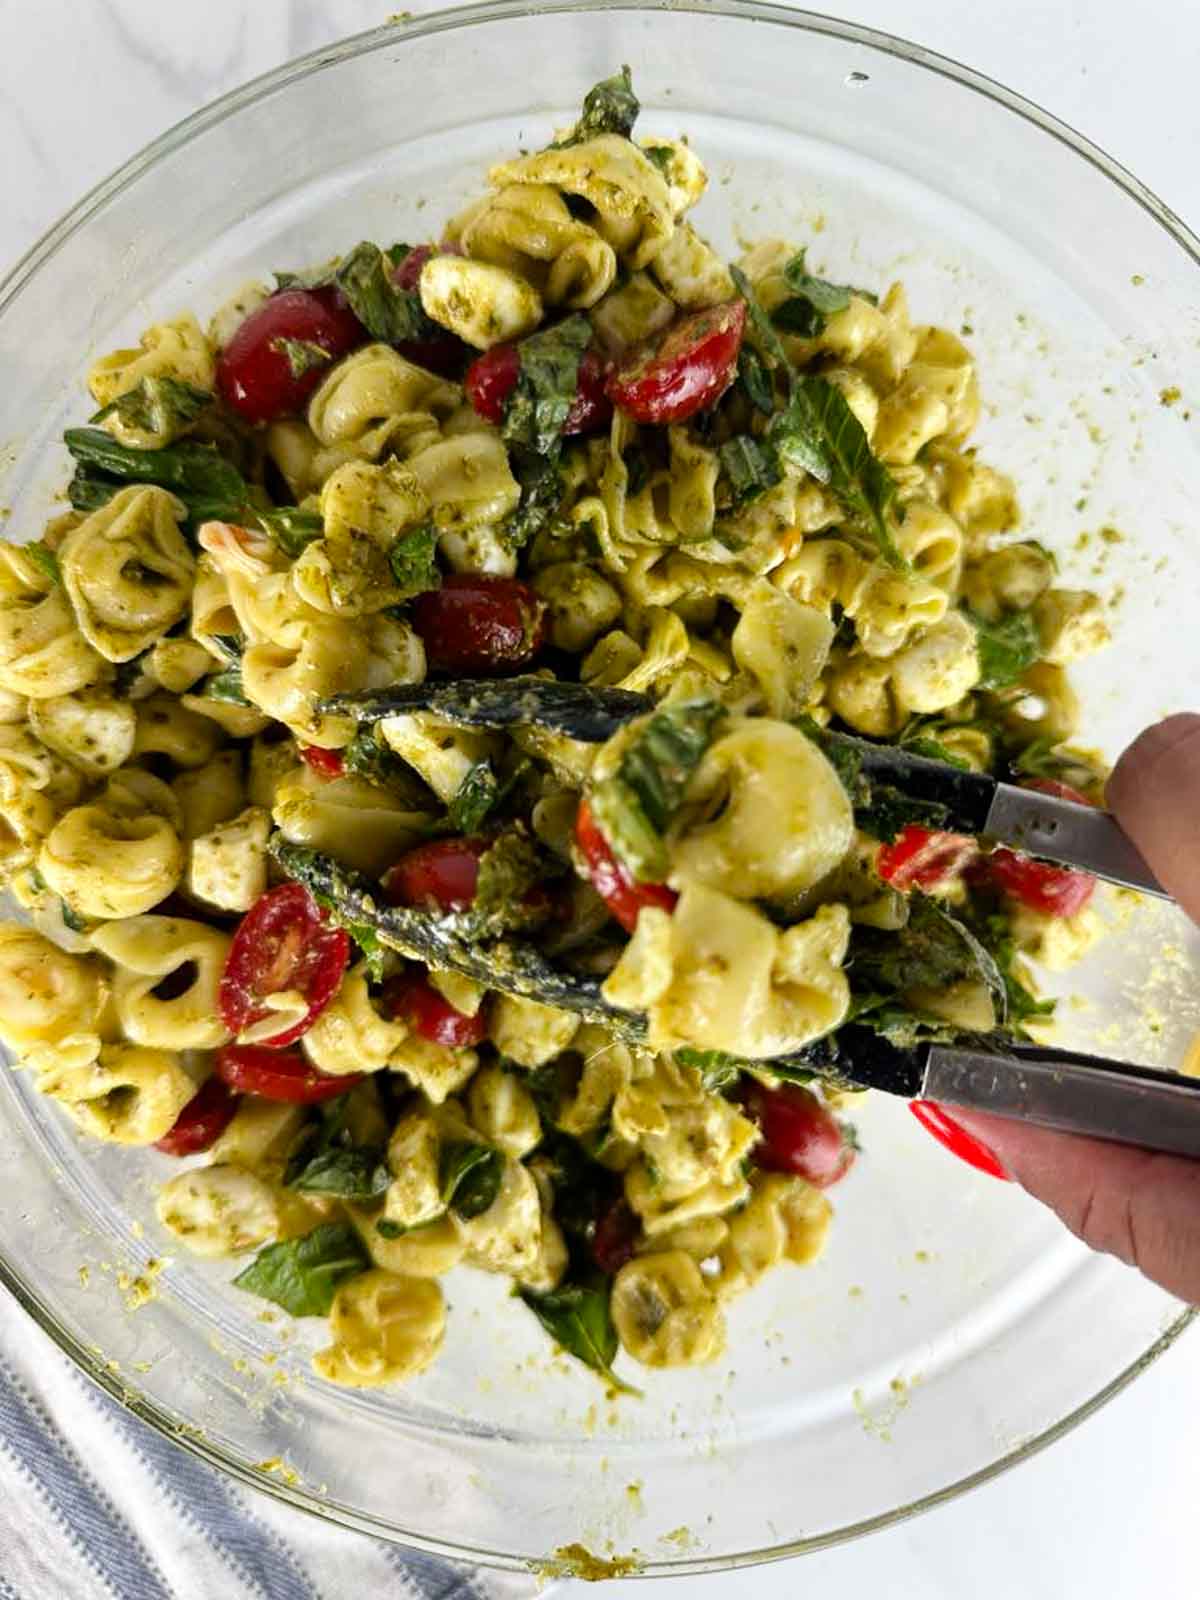 Toss the caprese tortellini pasta salad with pesto to evenly coat everything.